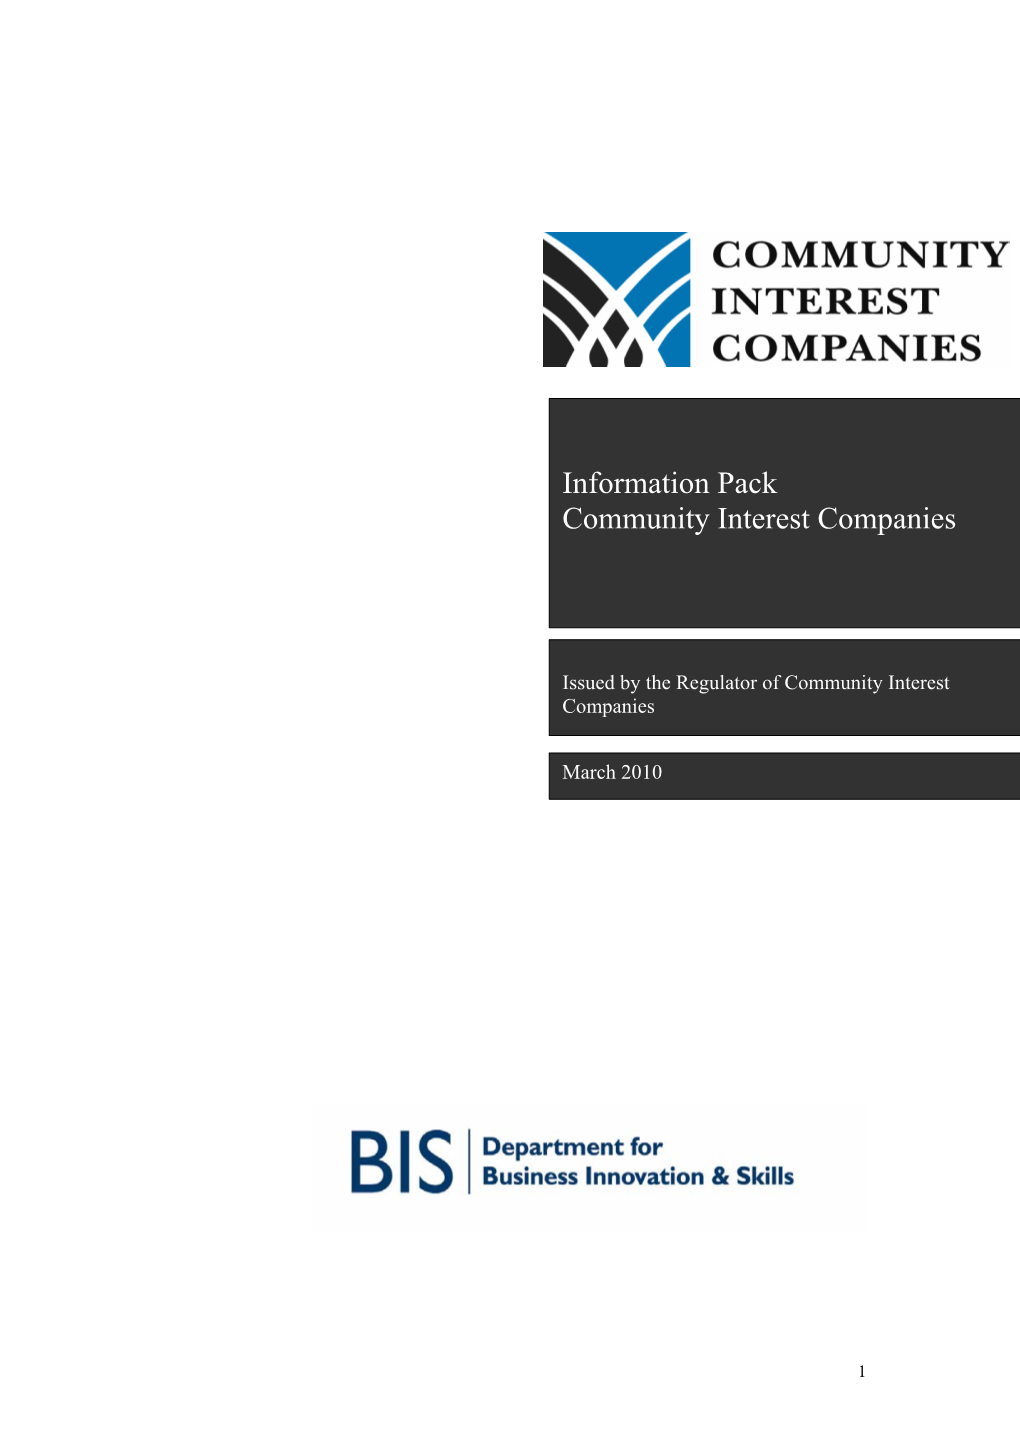 Information Pack Community Interest Companies